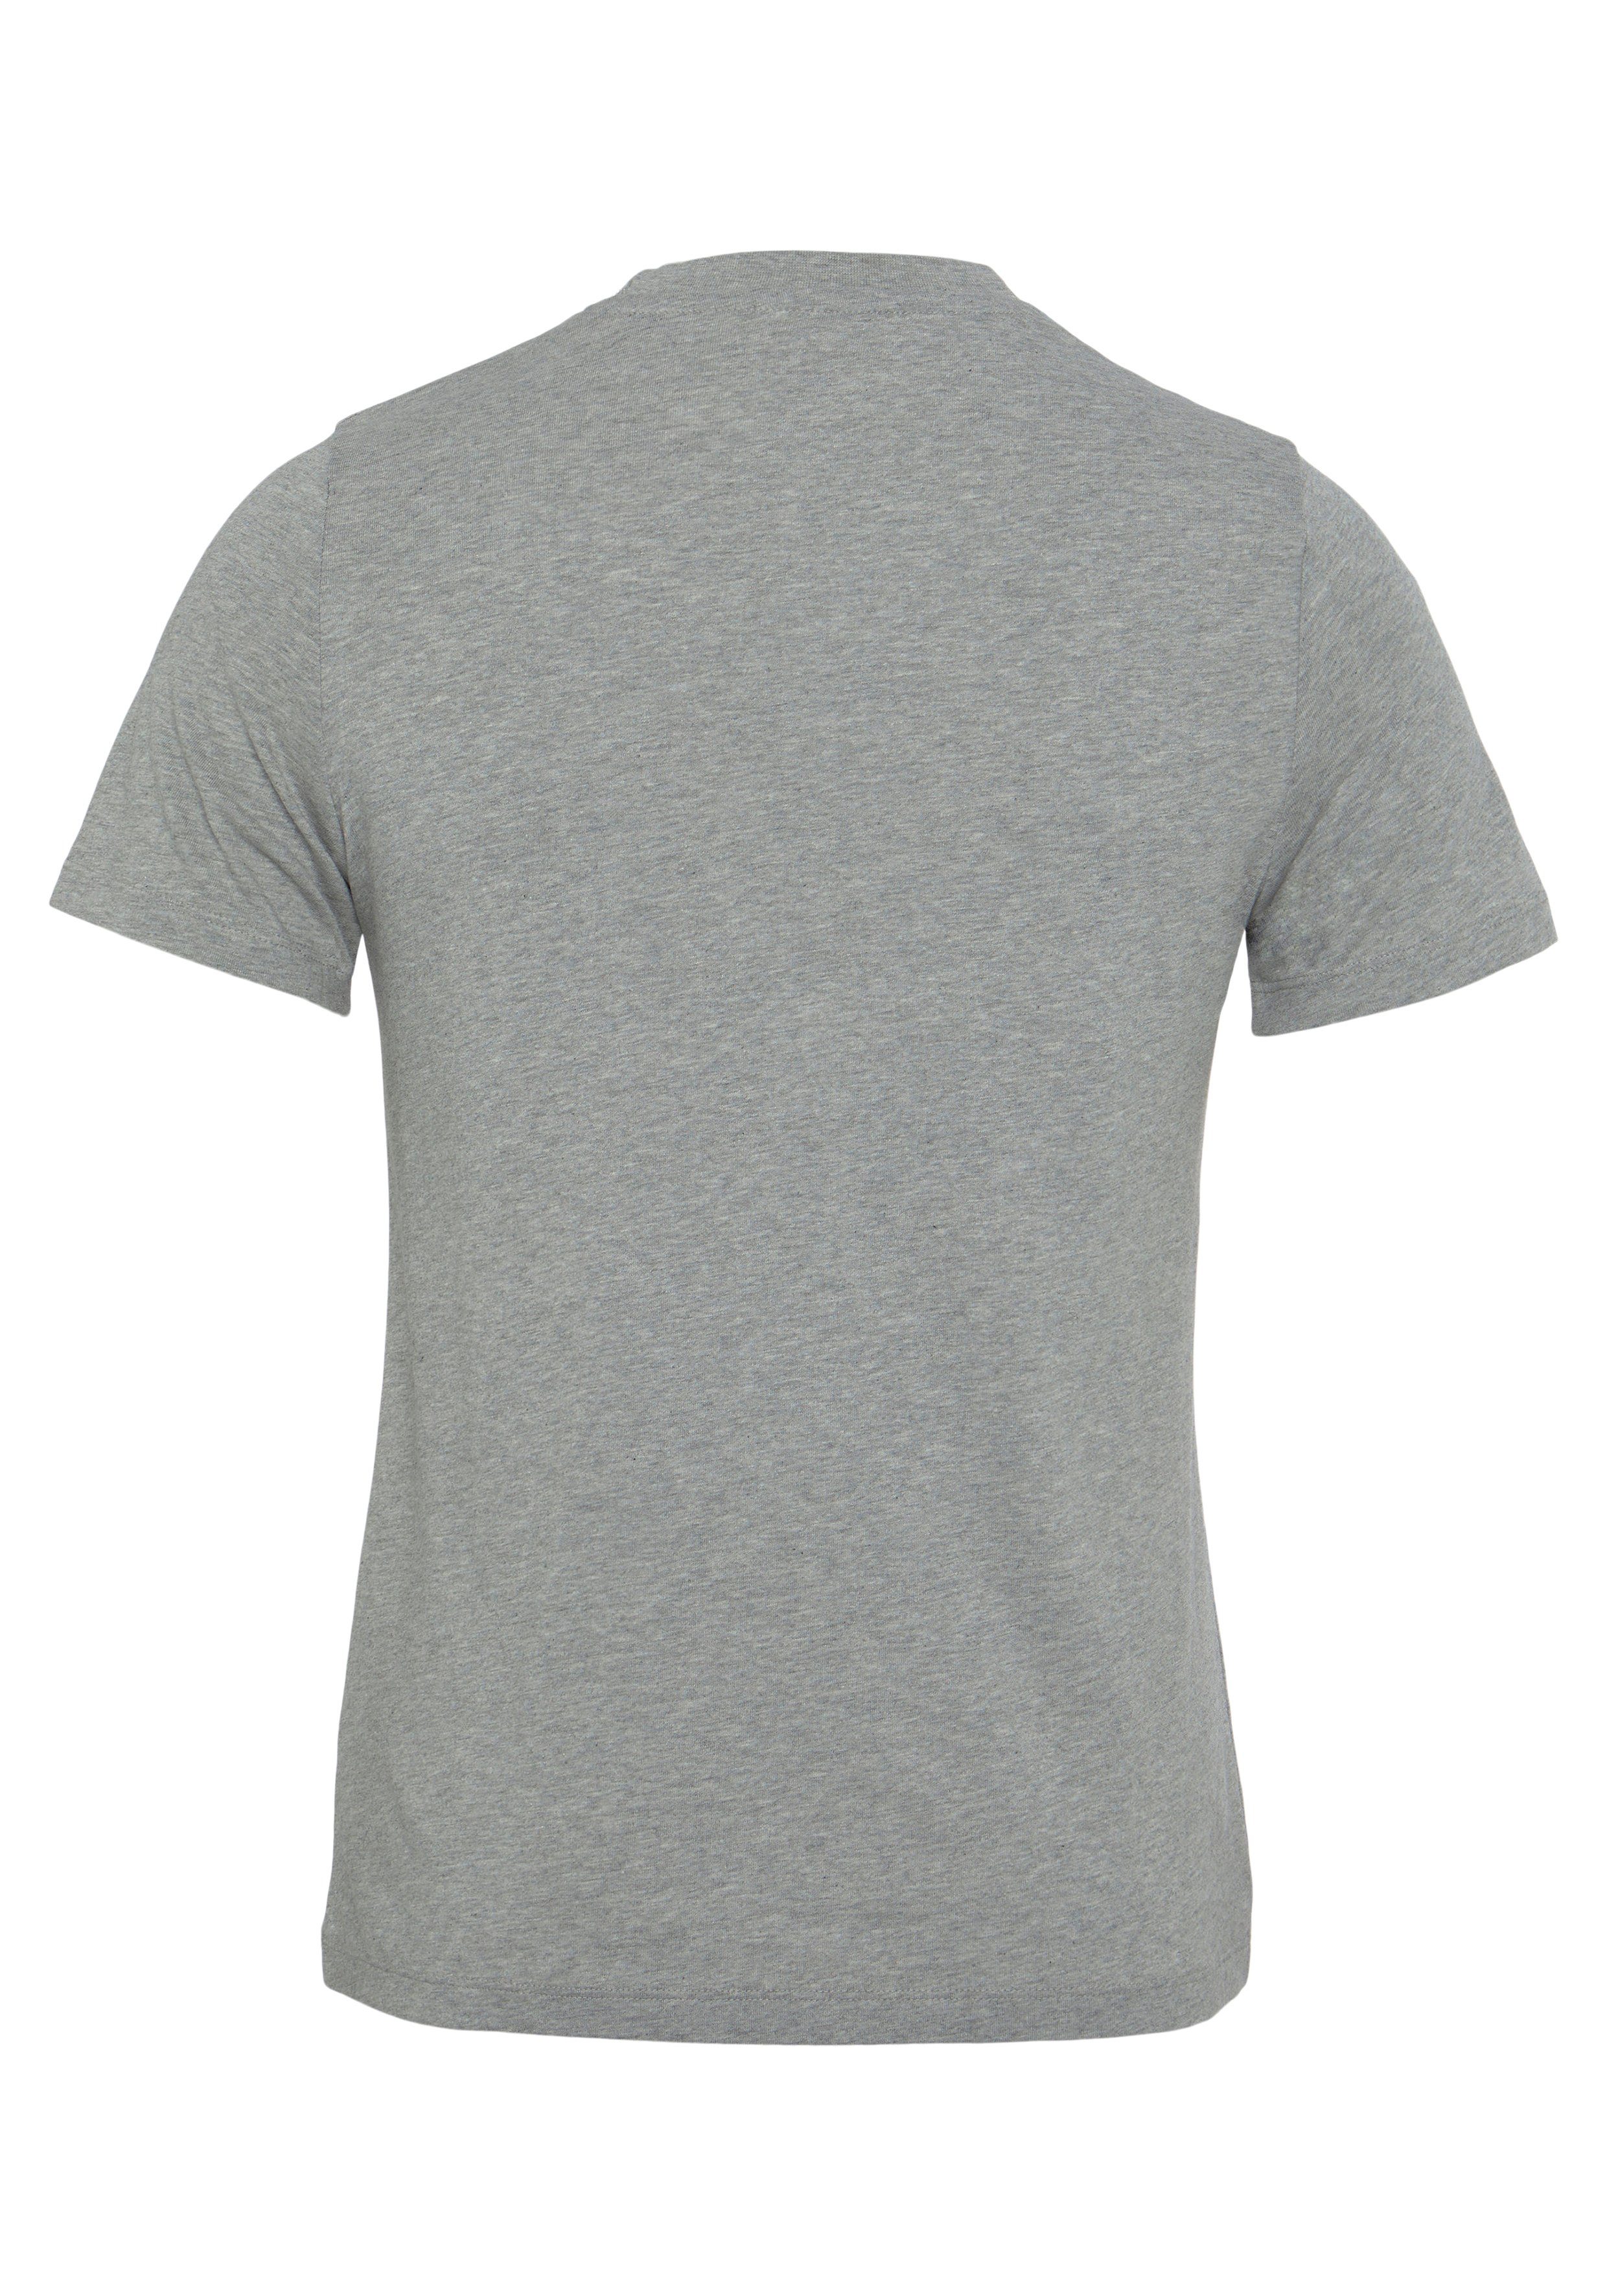 Reebok T-Shirt grey Read heather Reebok Graphic medium Tee